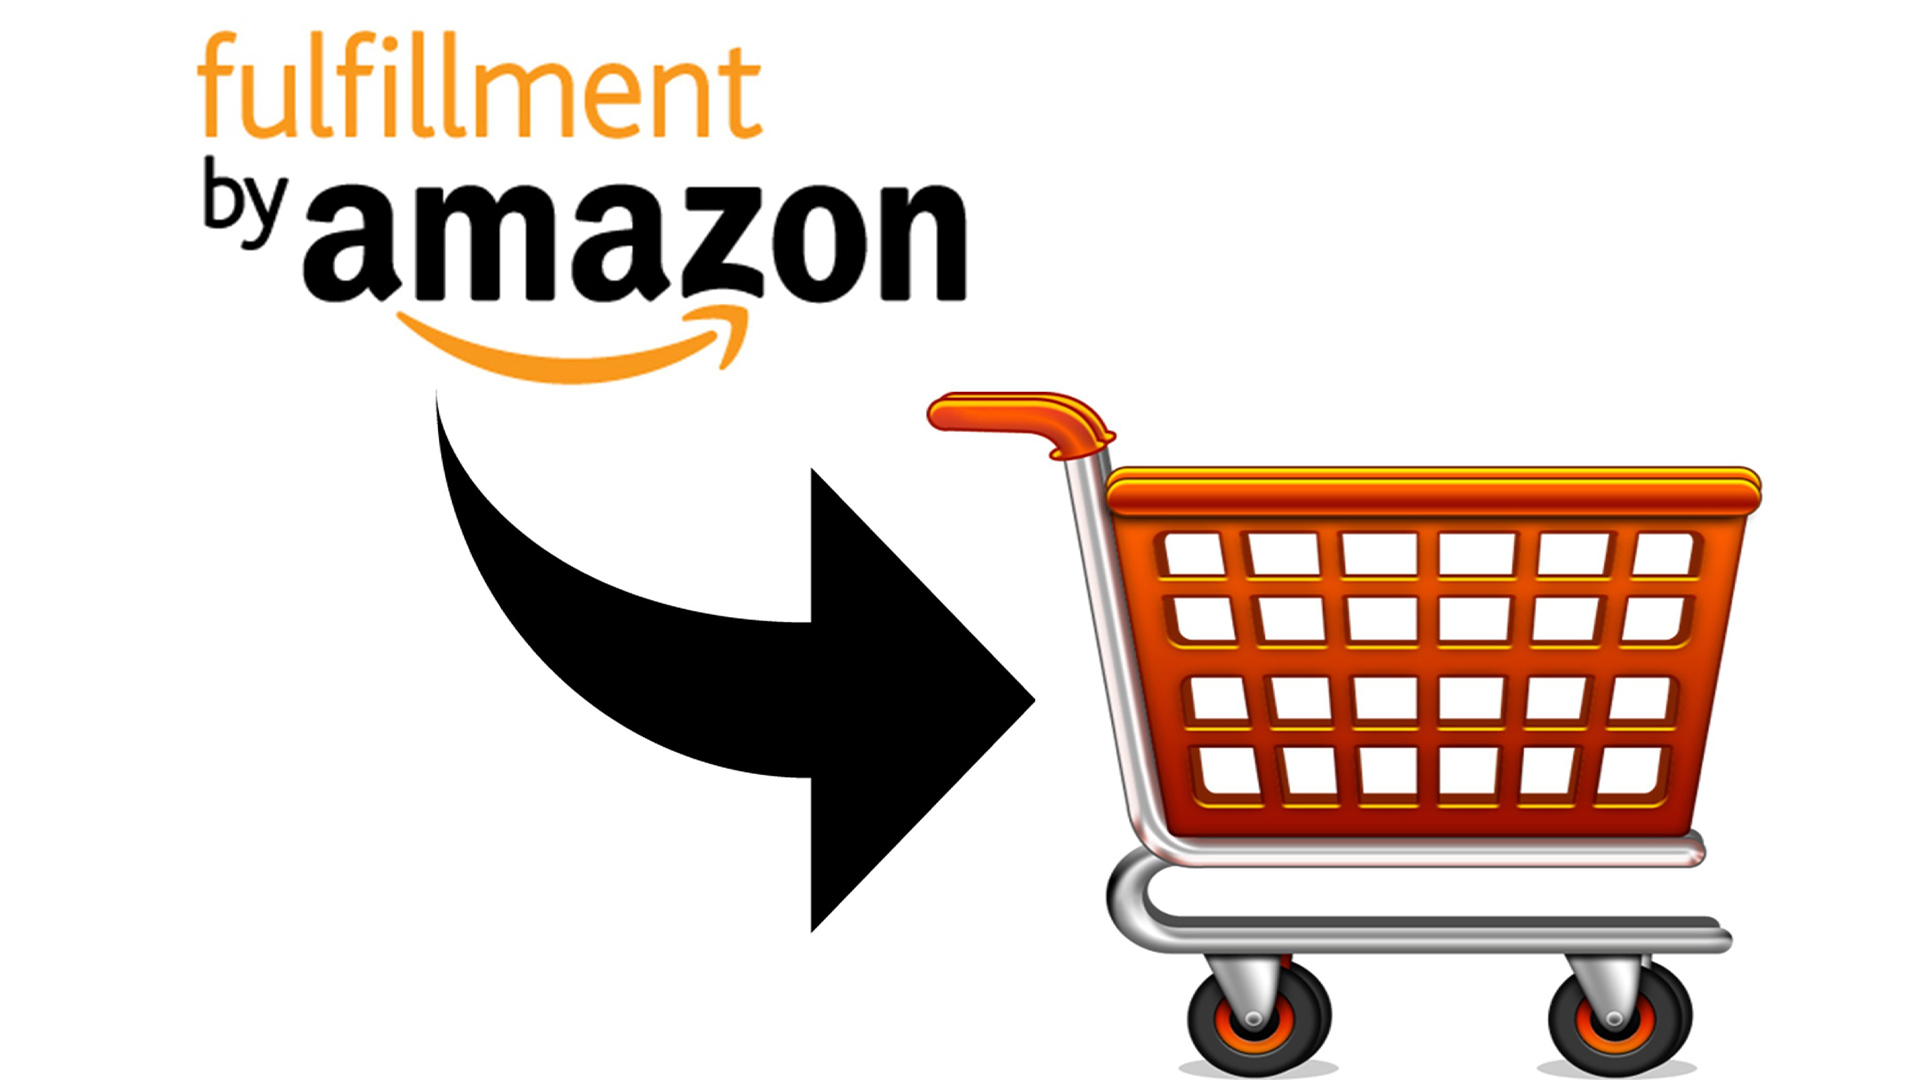  Fulfillment by Amazon logo